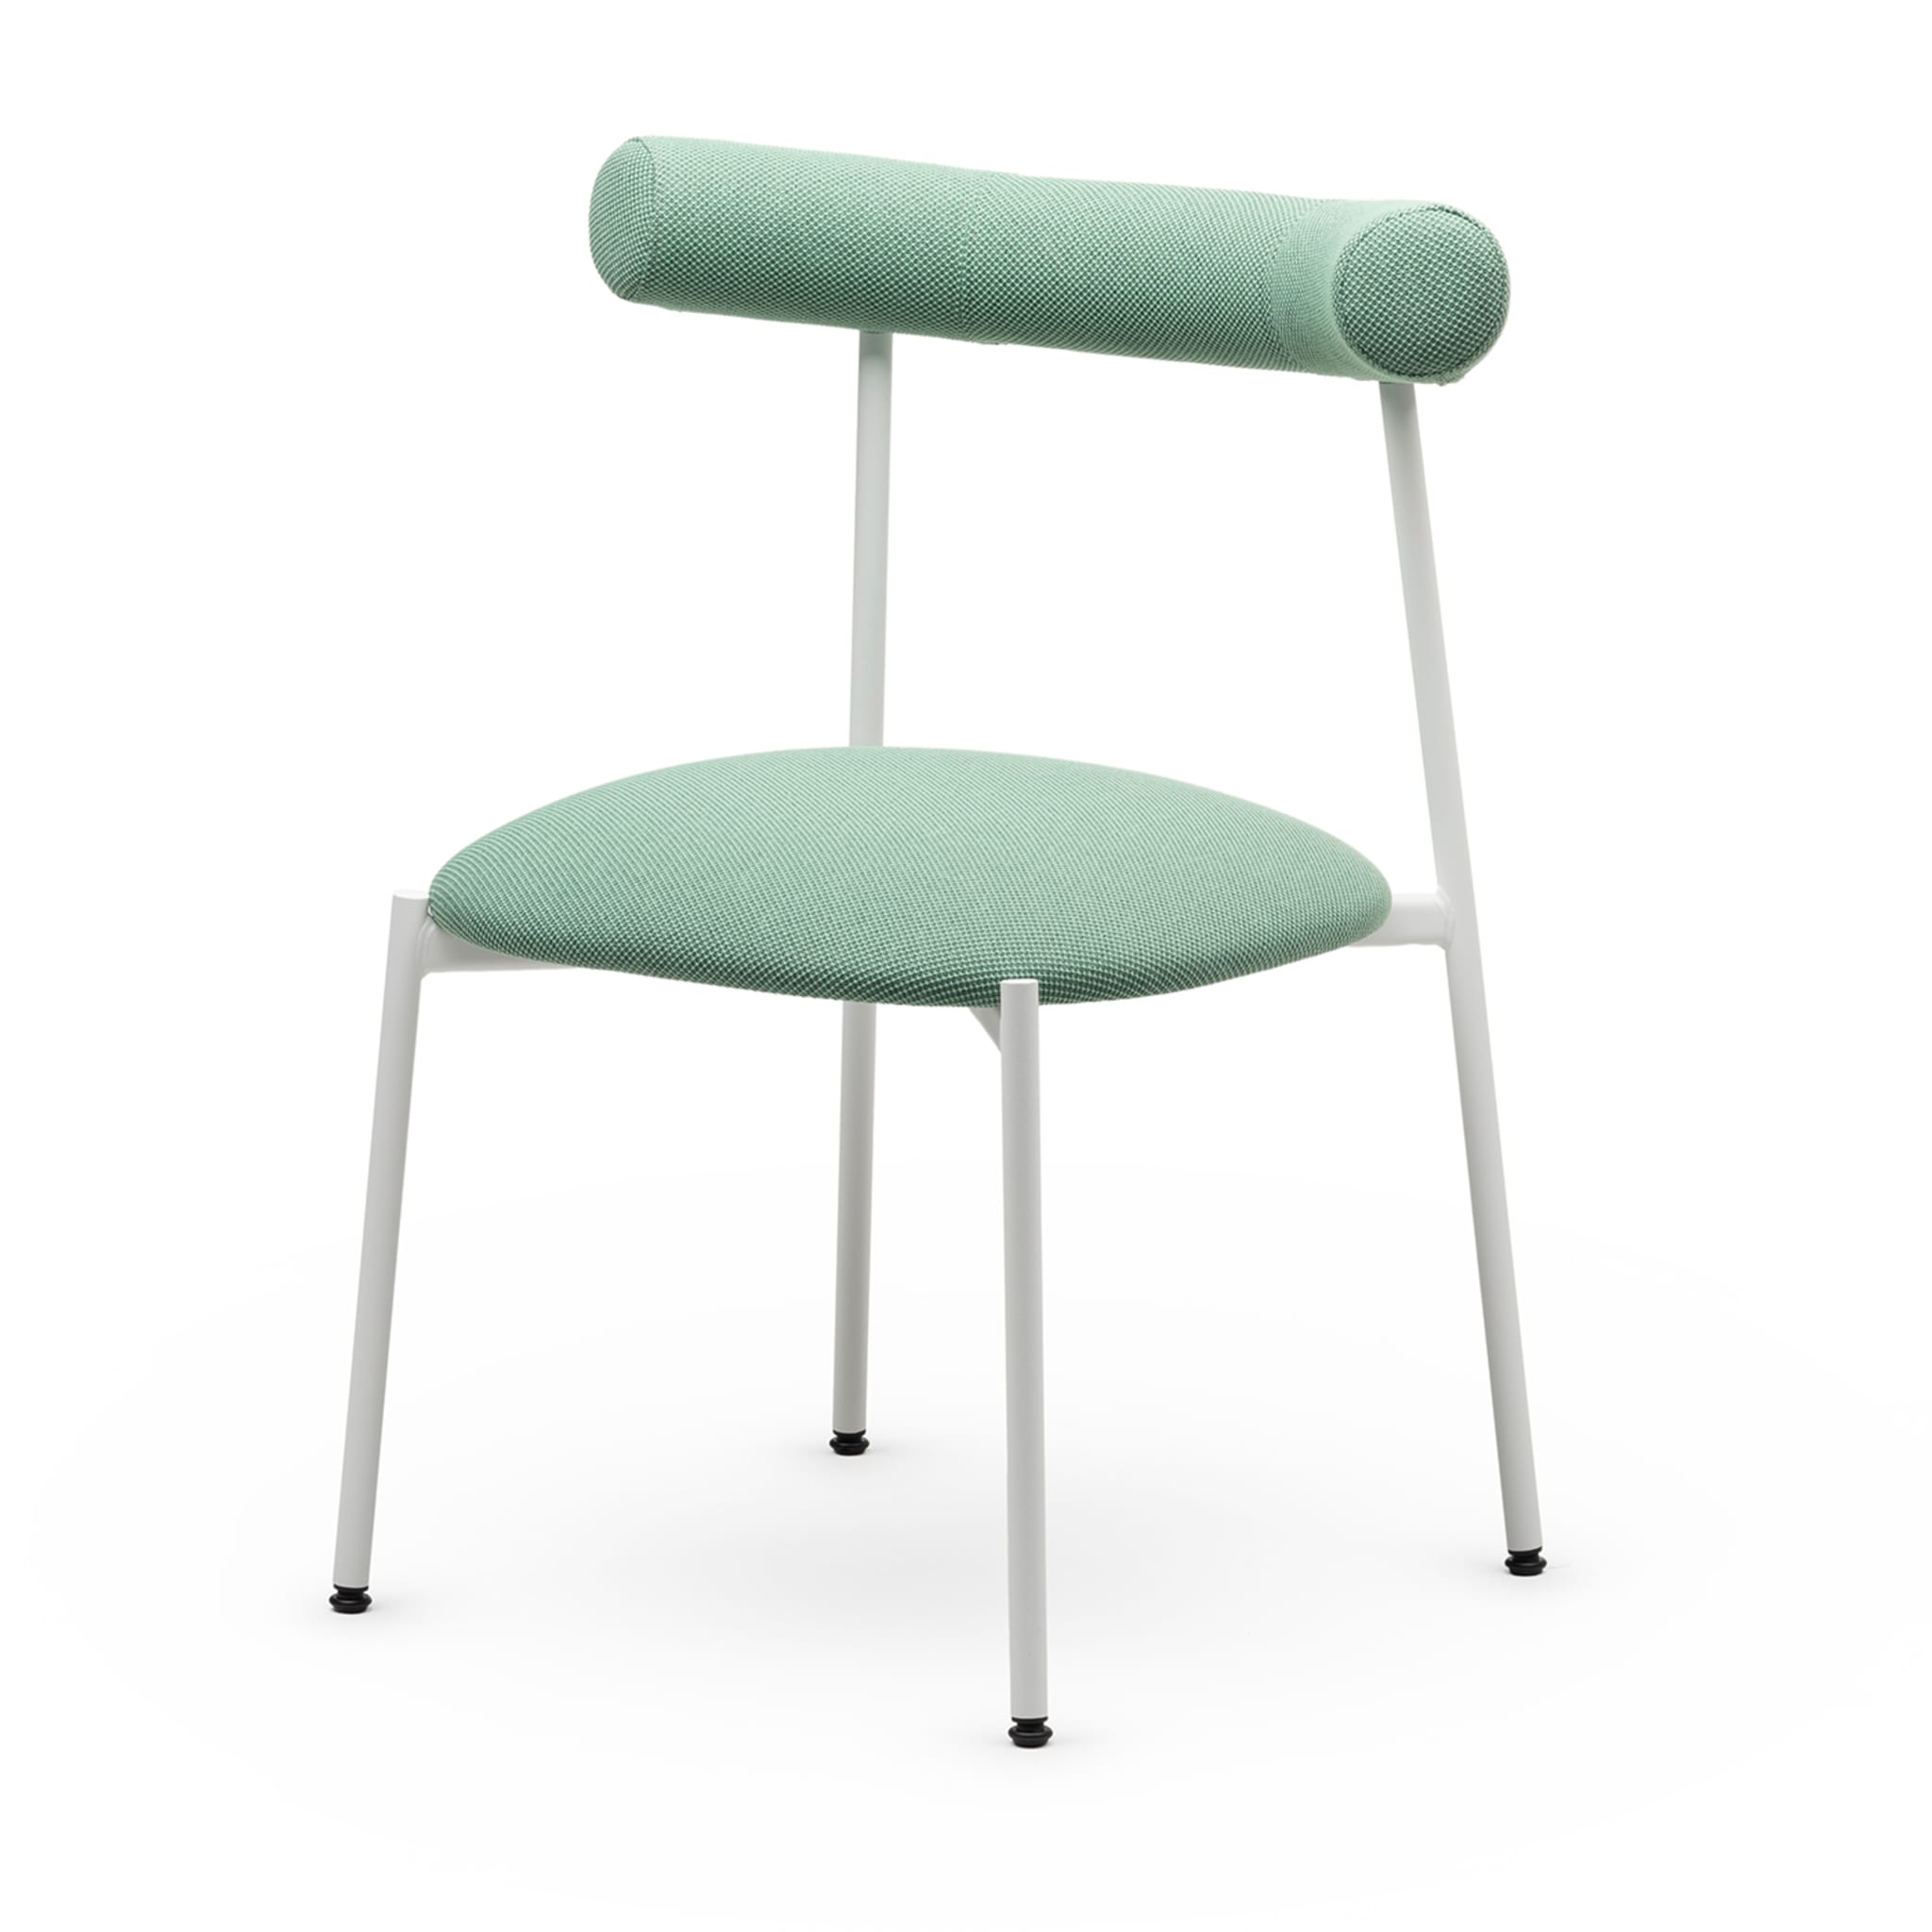 Pampa S Sage-Green & White Chair by Studio Pastina - Alternative view 2